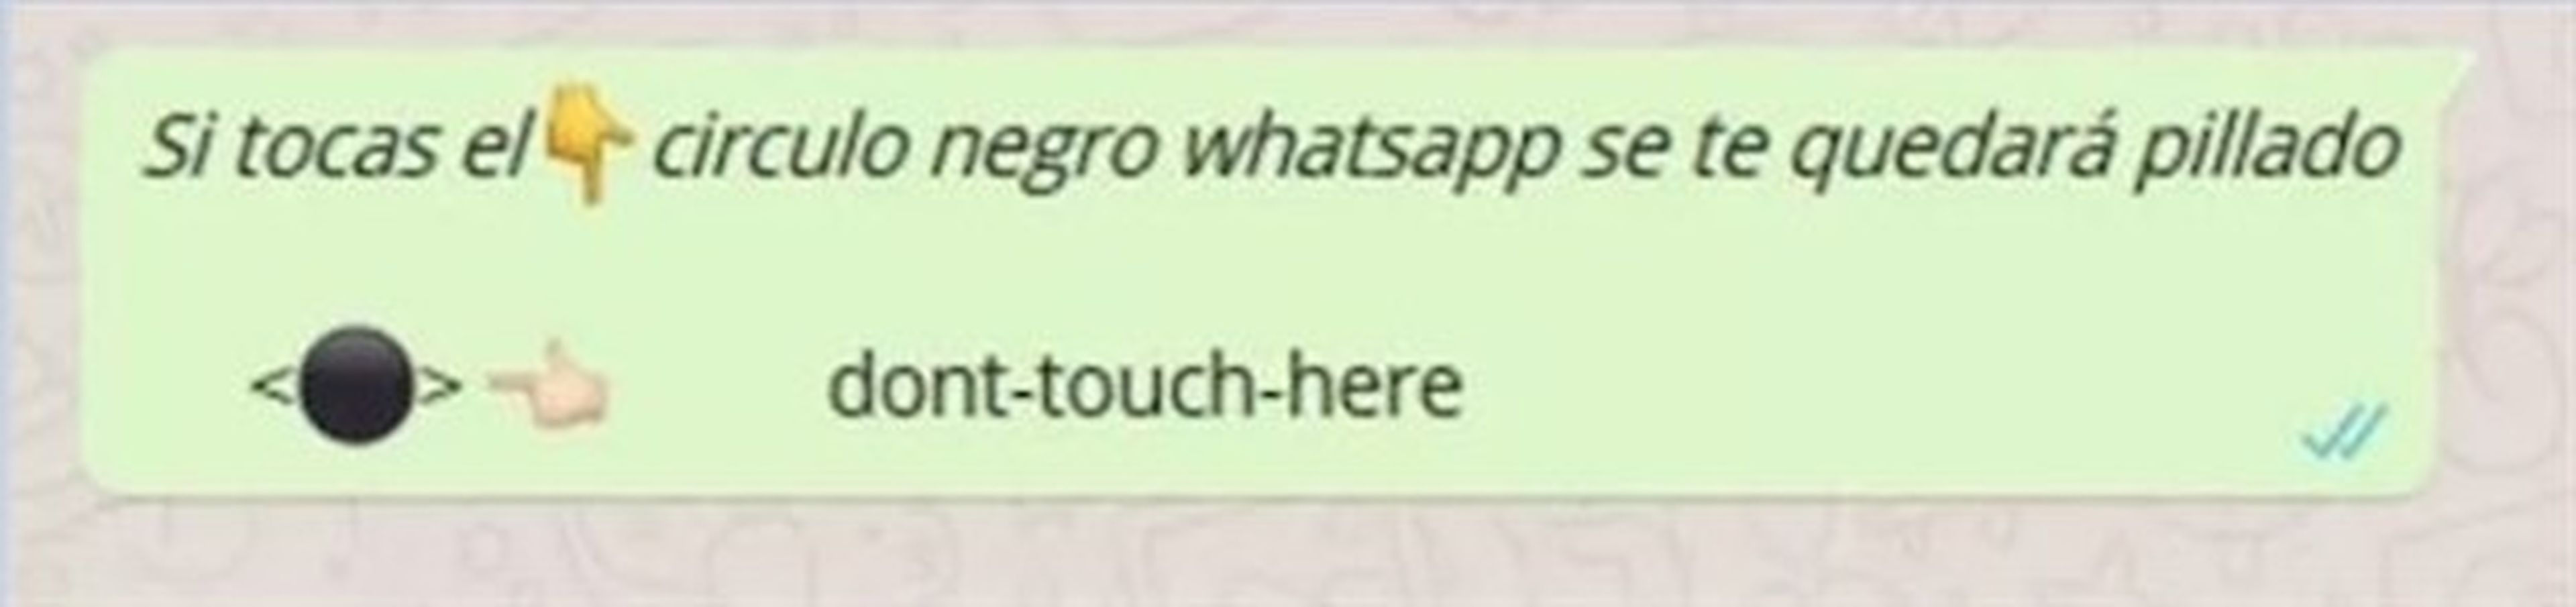 Círculo negro WhatsApp